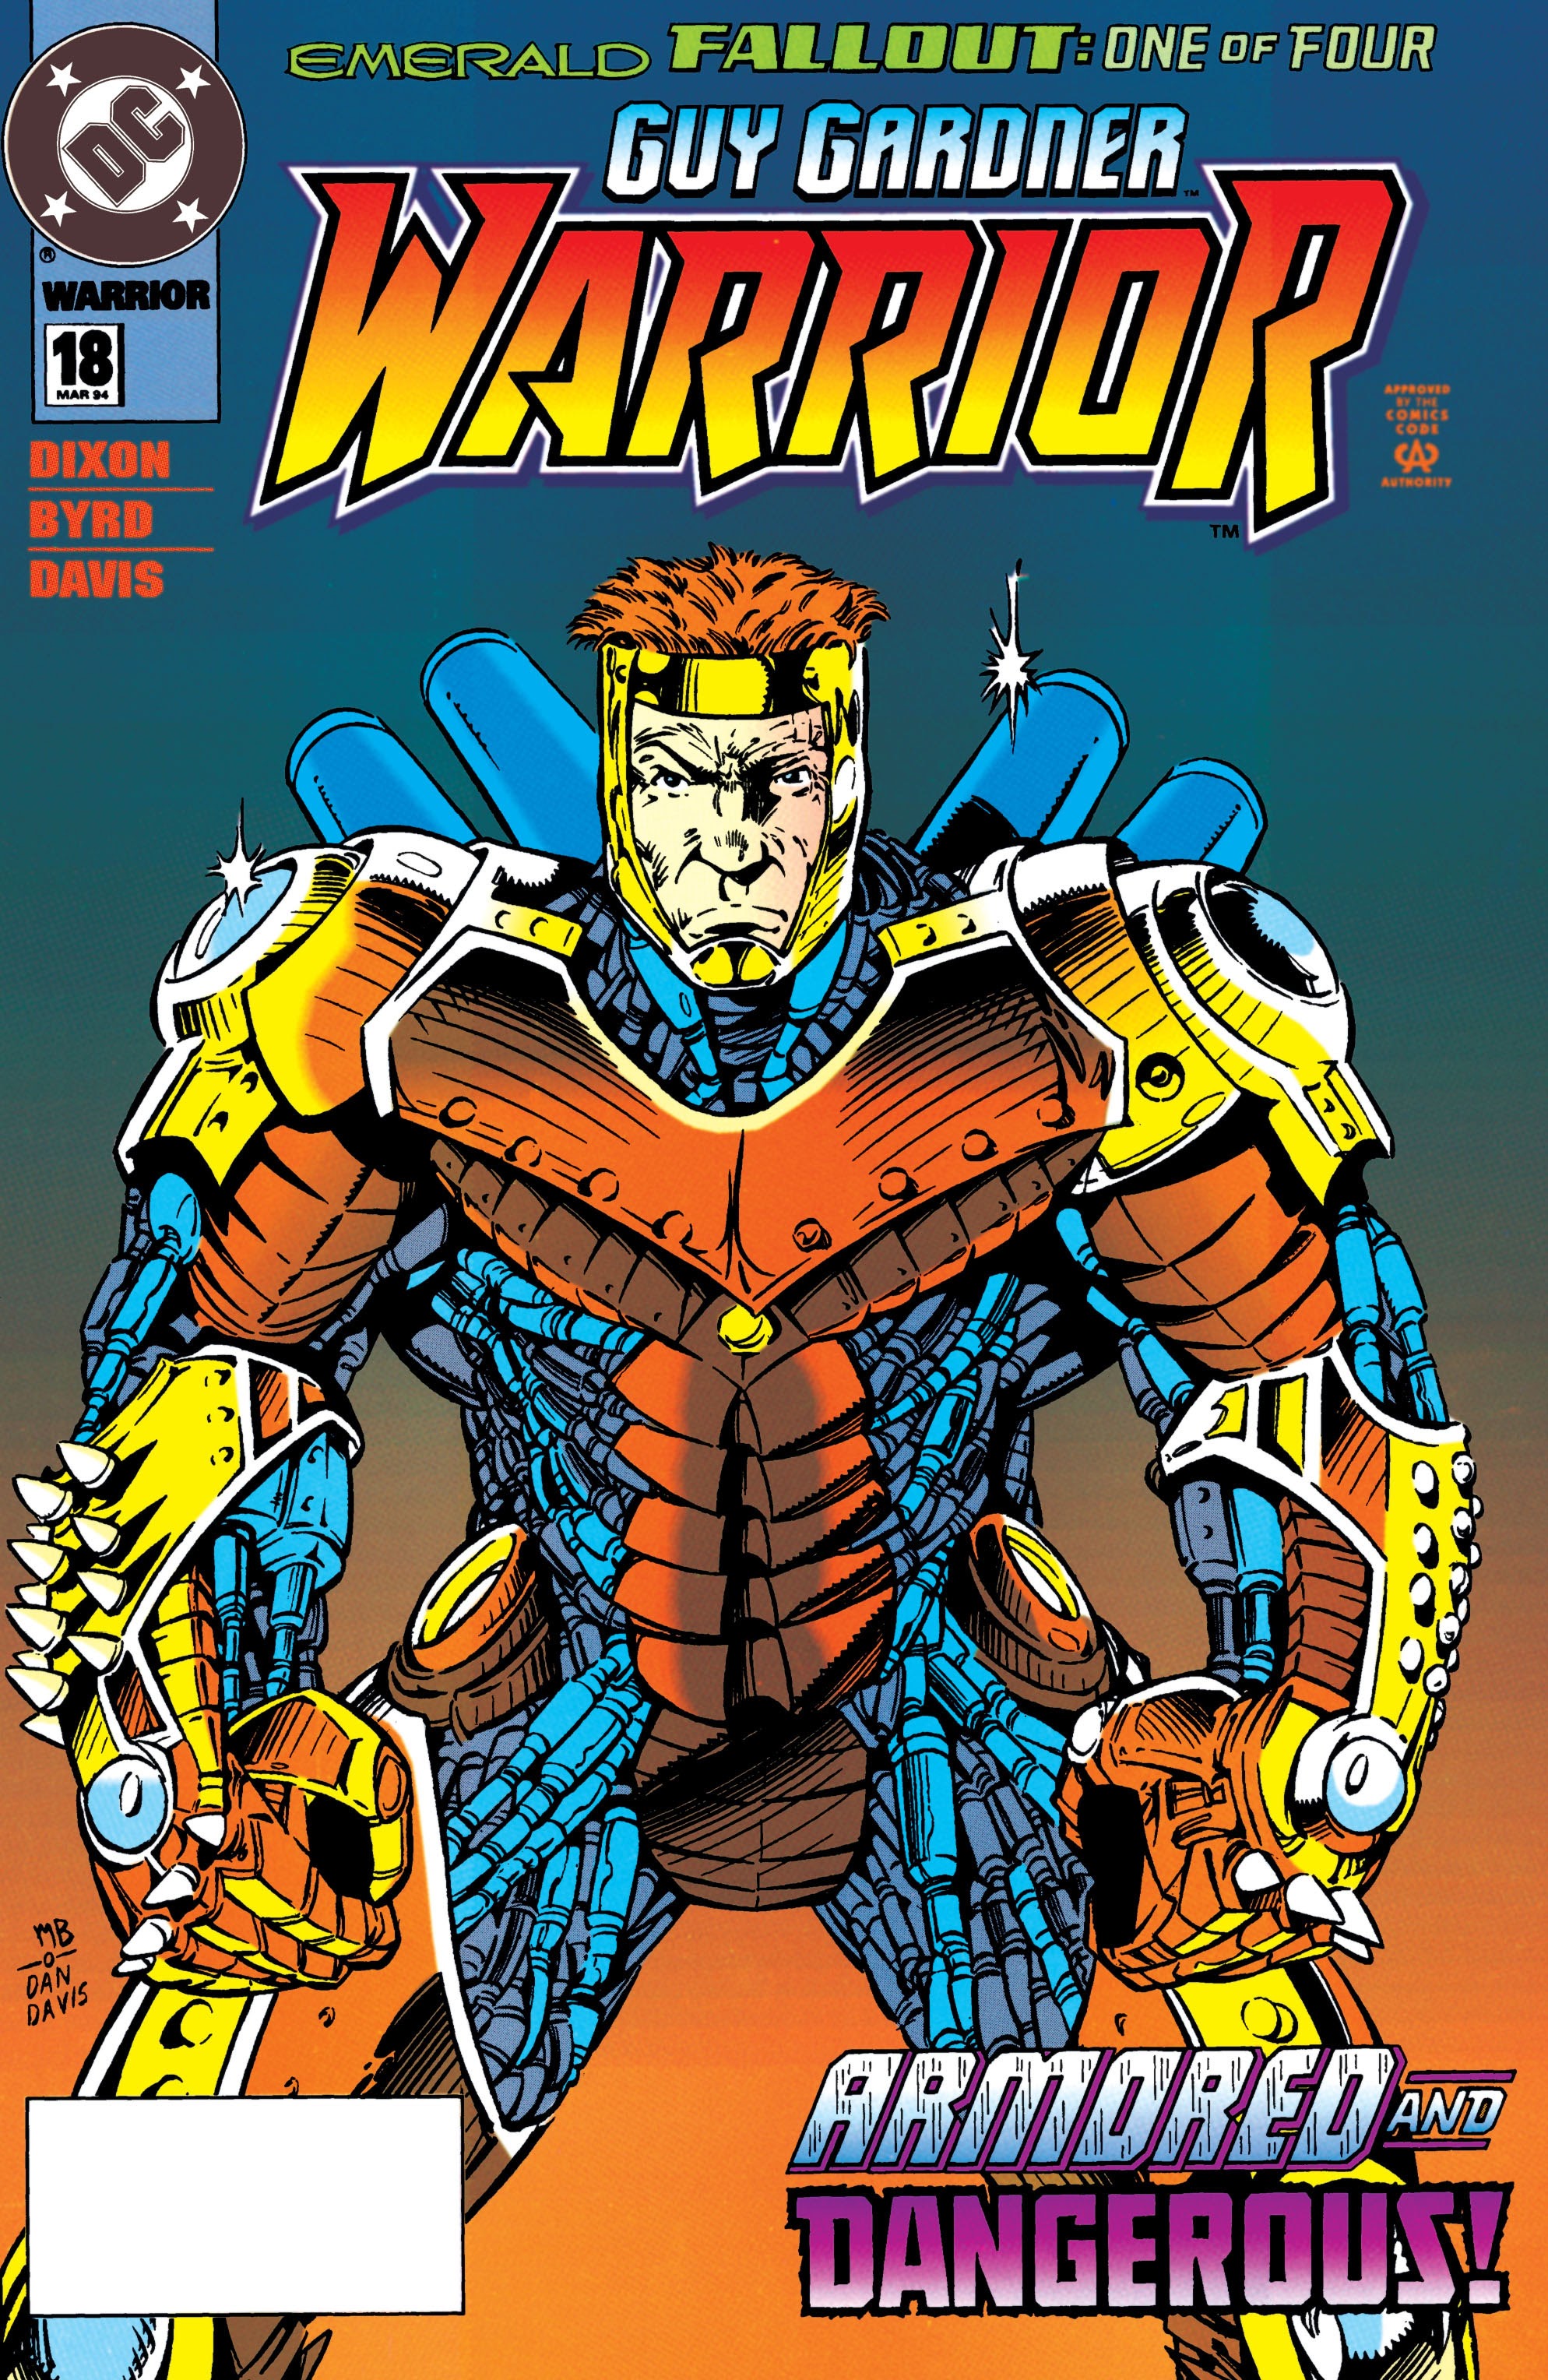 Read online Guy Gardner: Warrior comic -  Issue #18 - 1